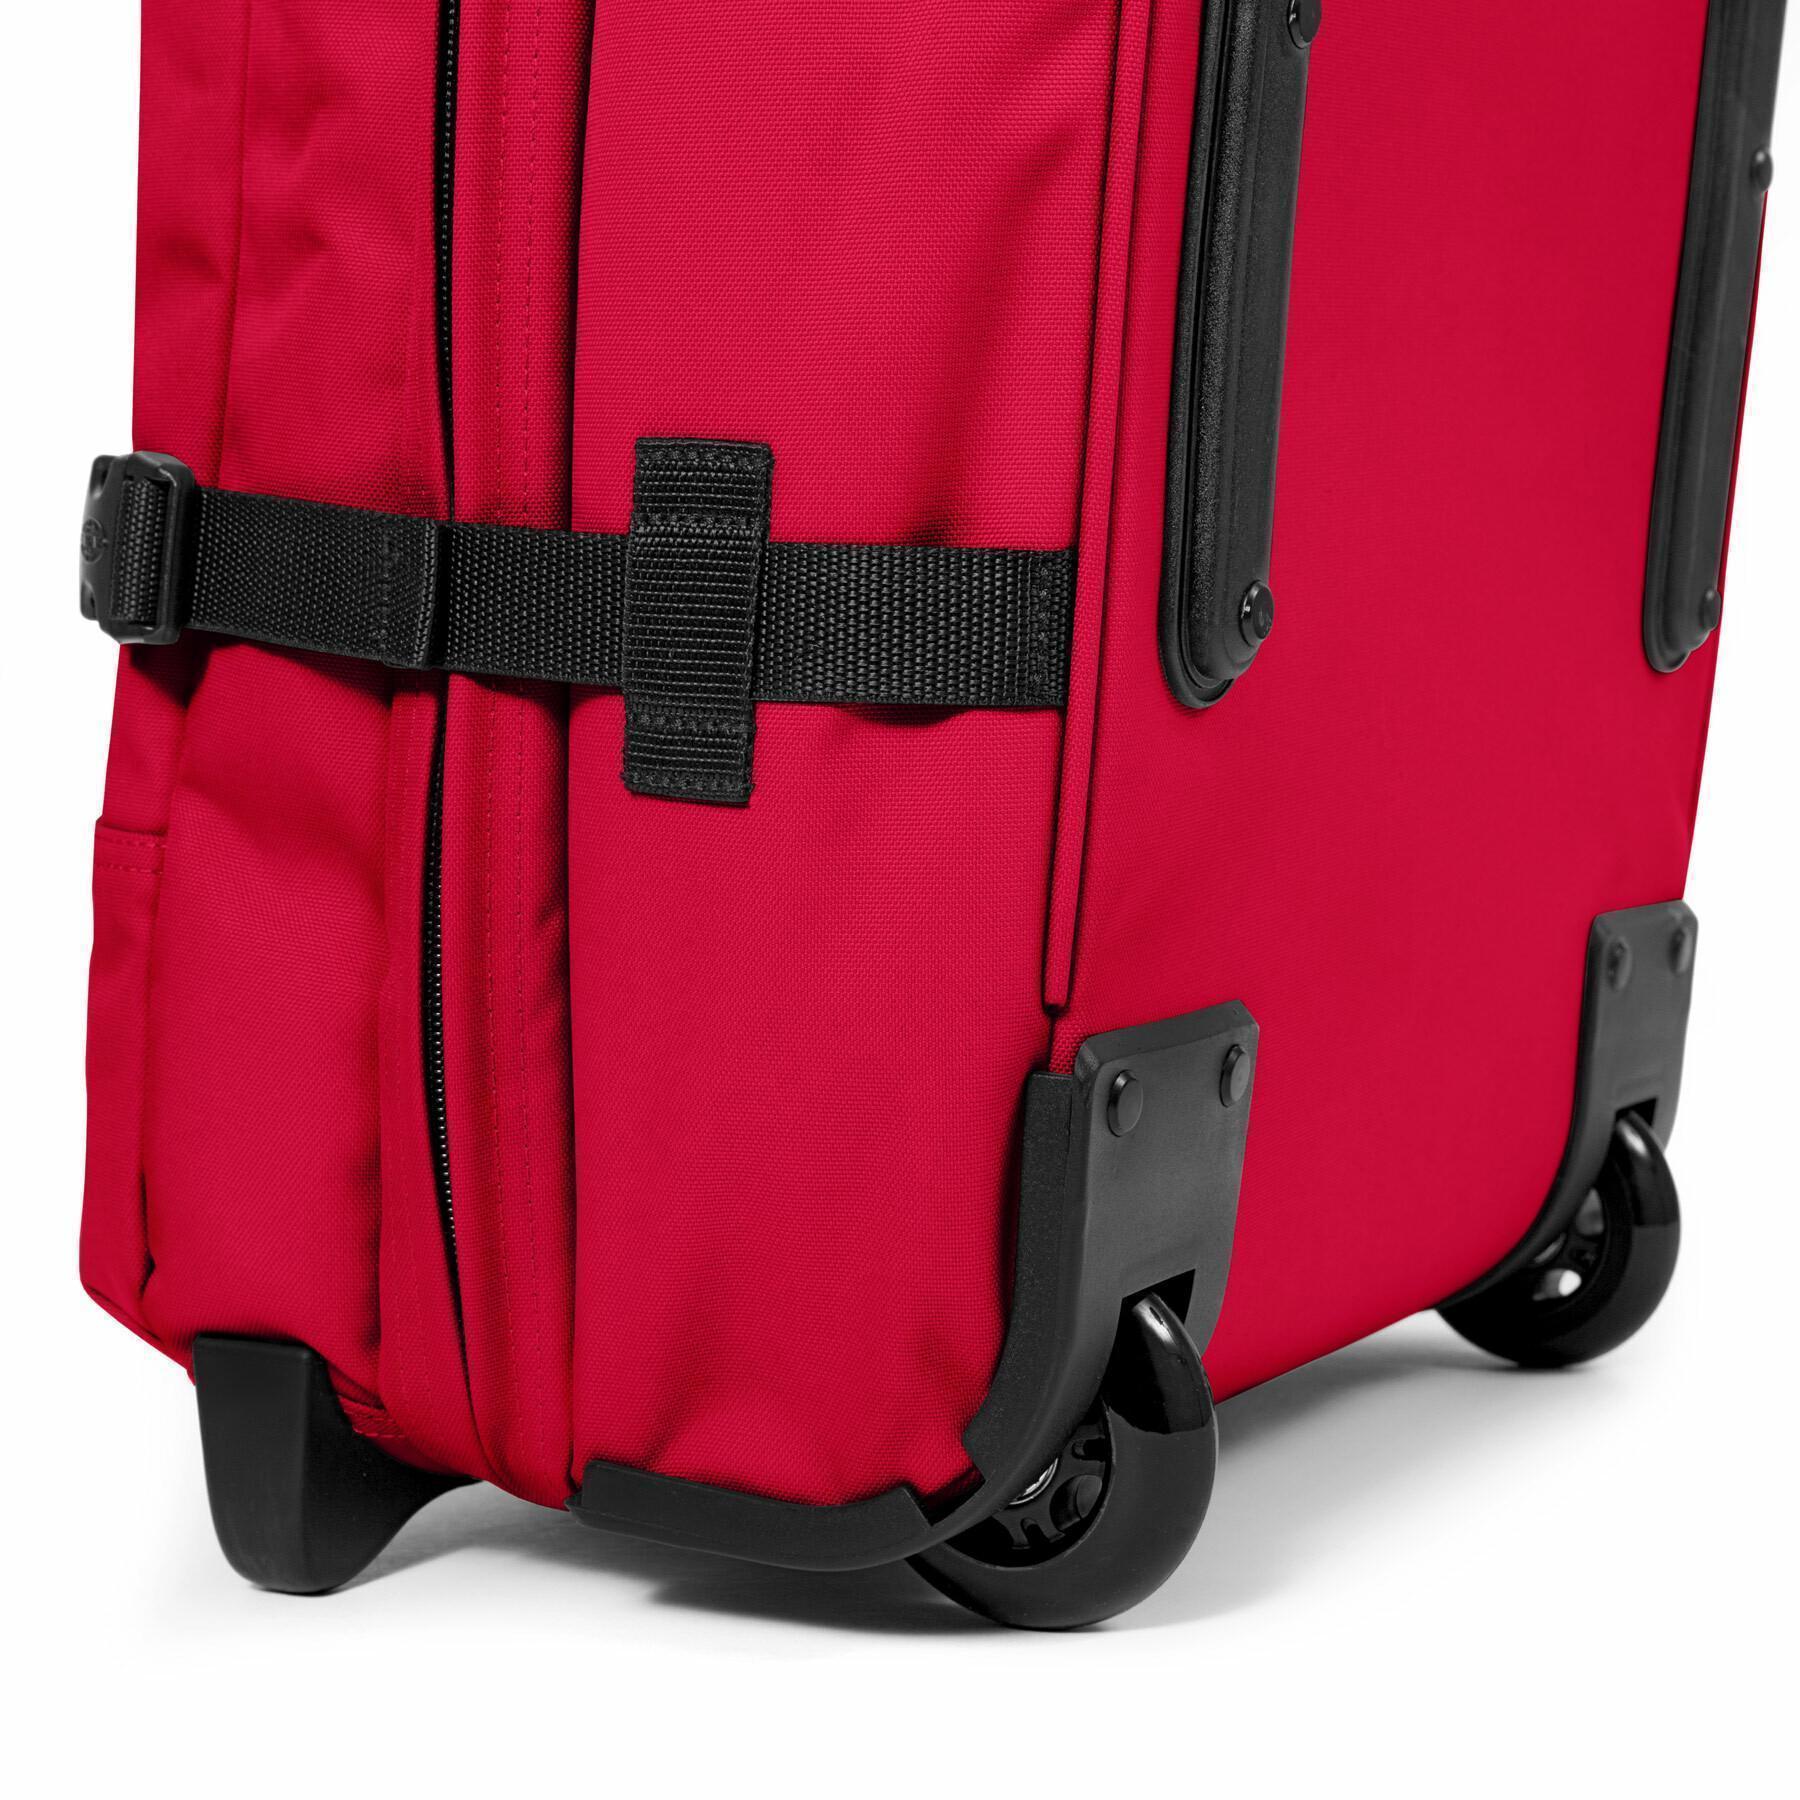 Travel bag Eastpak Tranverz M (TSA)